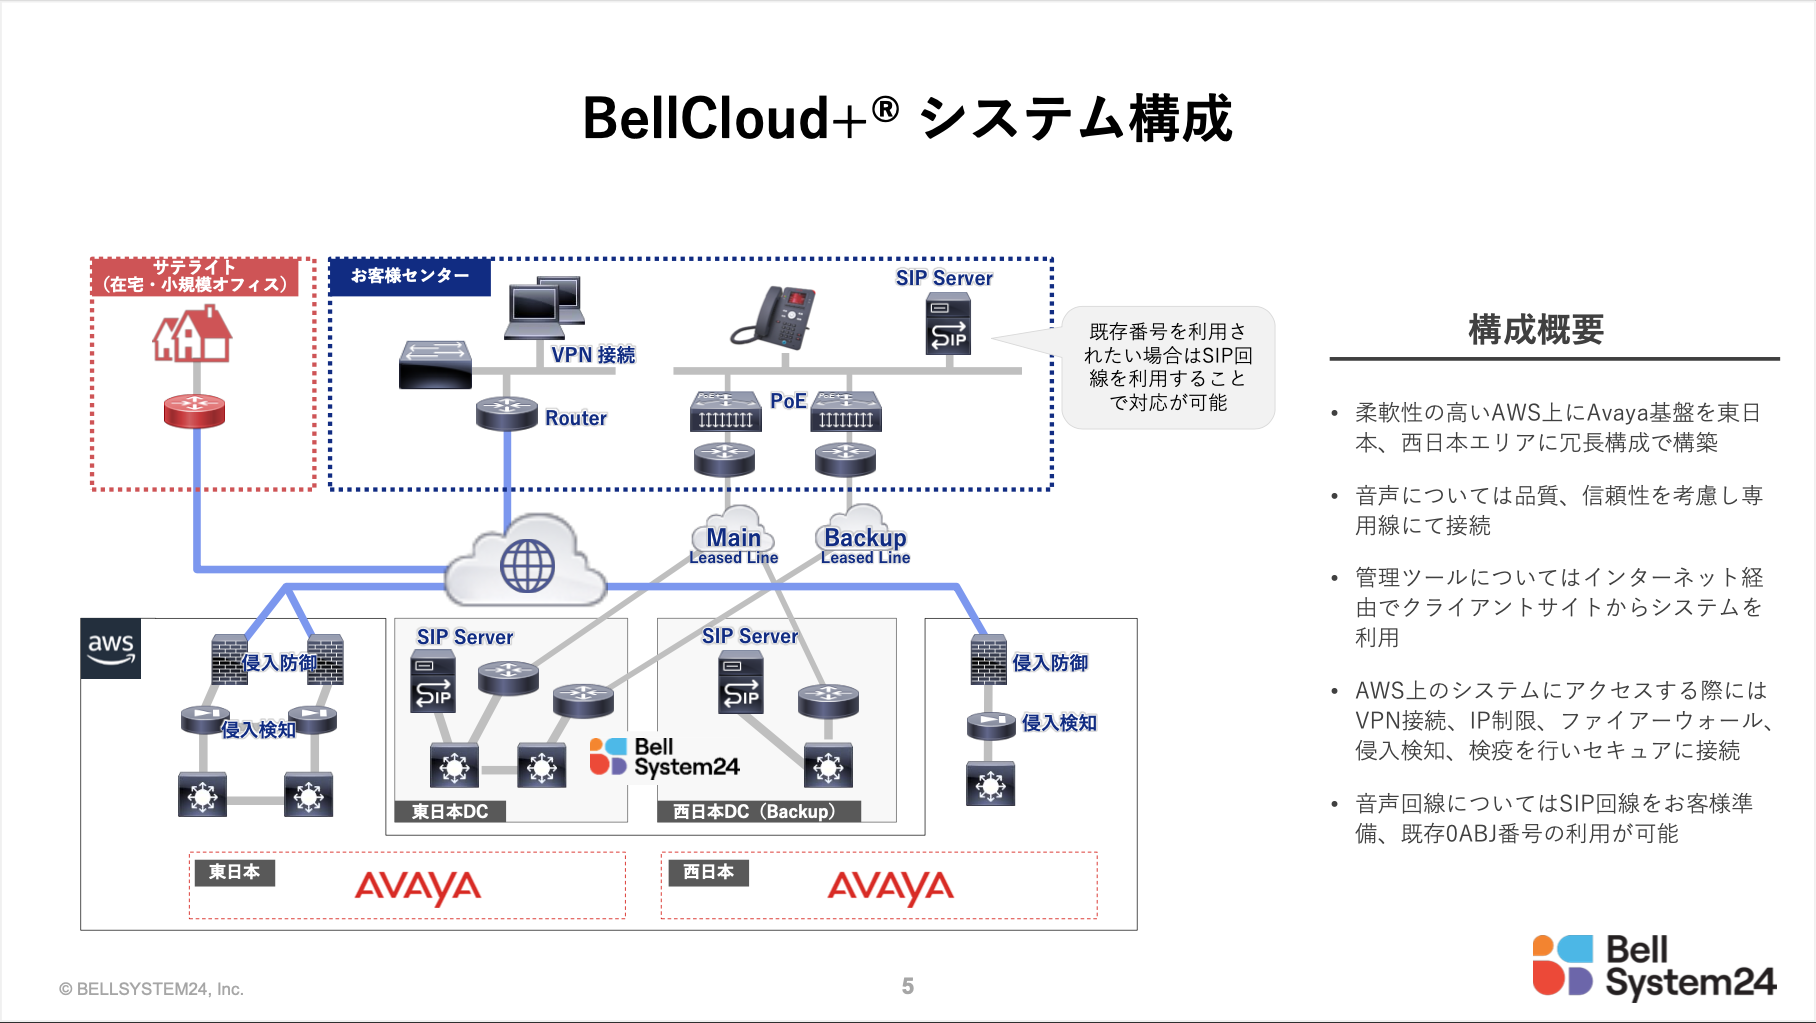 BellCloud+®ご紹介資料 02